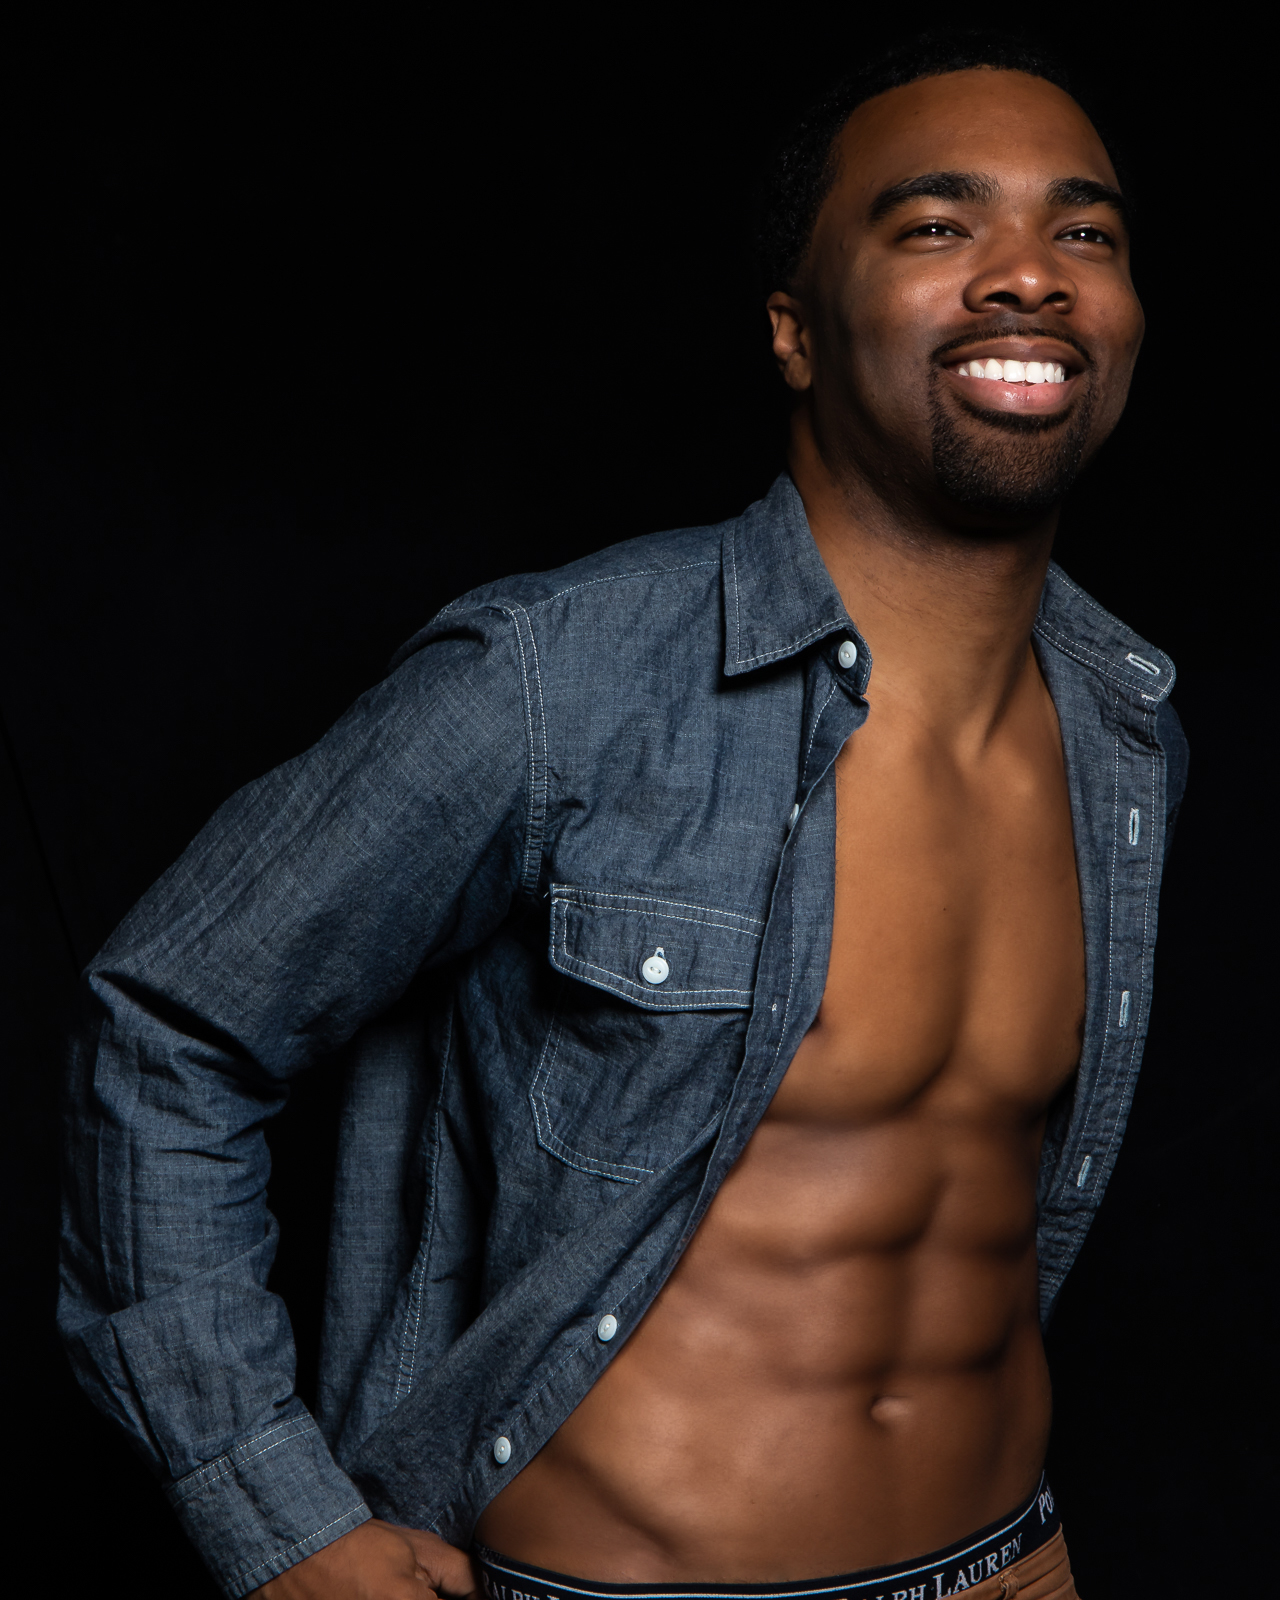 Sexy black man with shirt off studio portrait fashion photoshoot